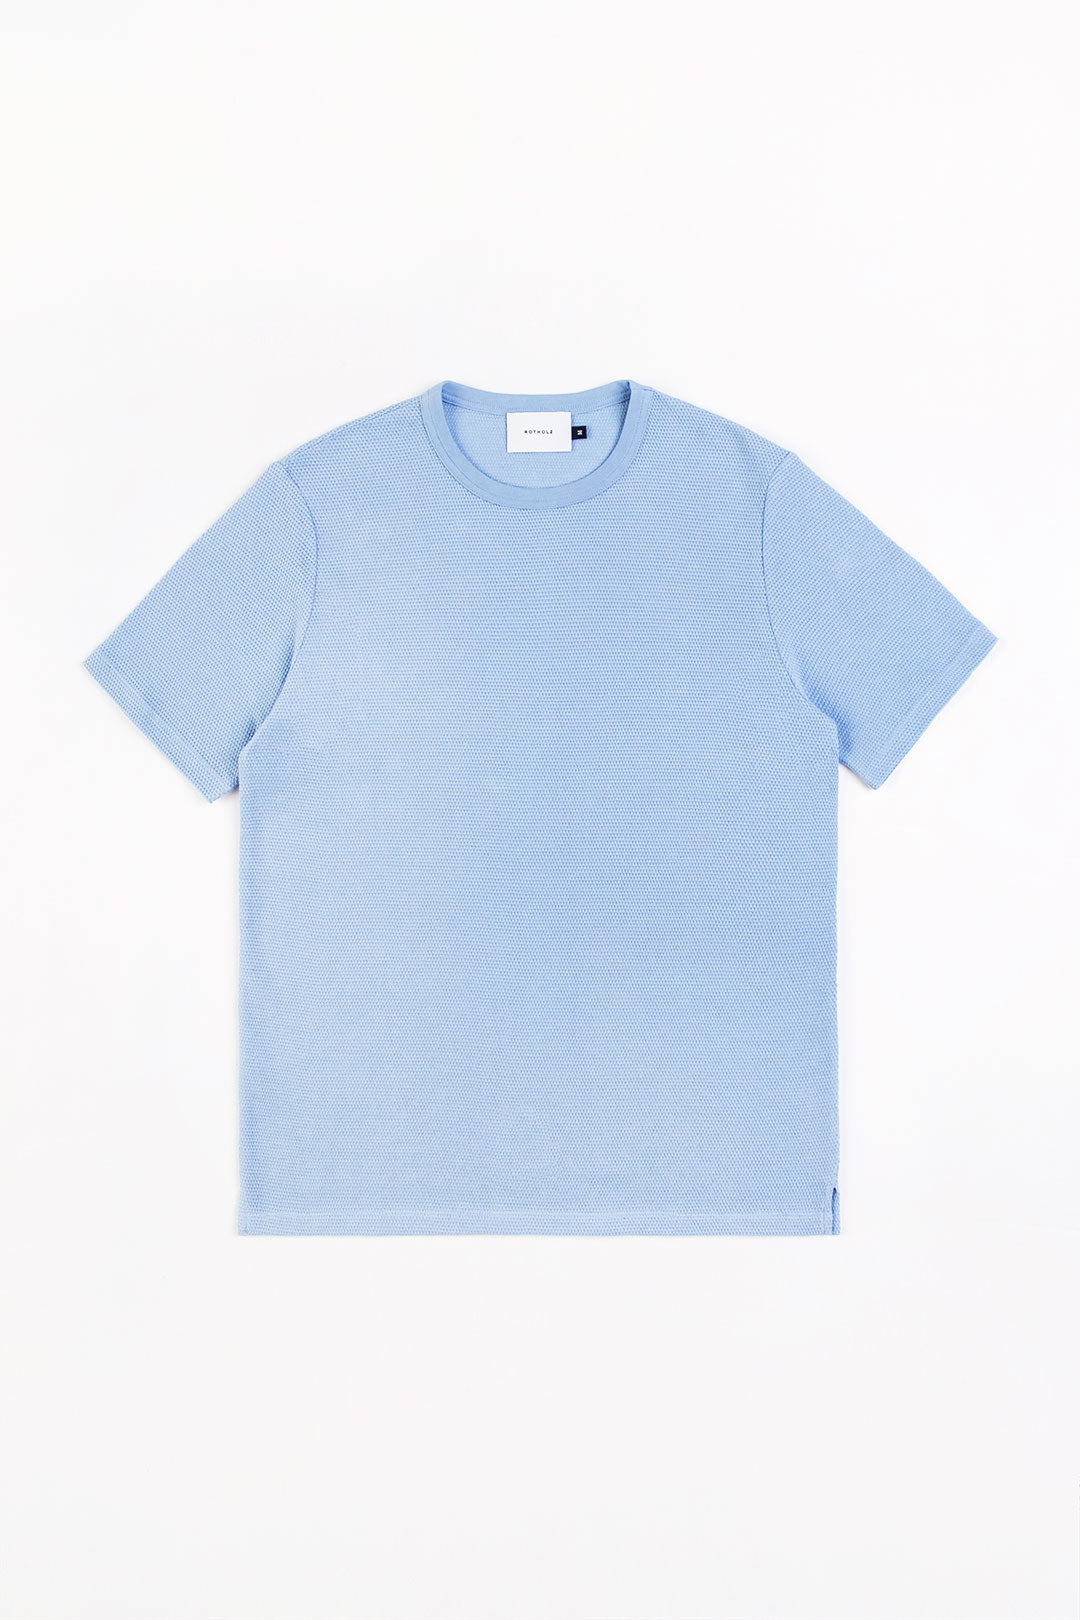 T-shirt bleu clair en coton 100% biologique de Rotholz